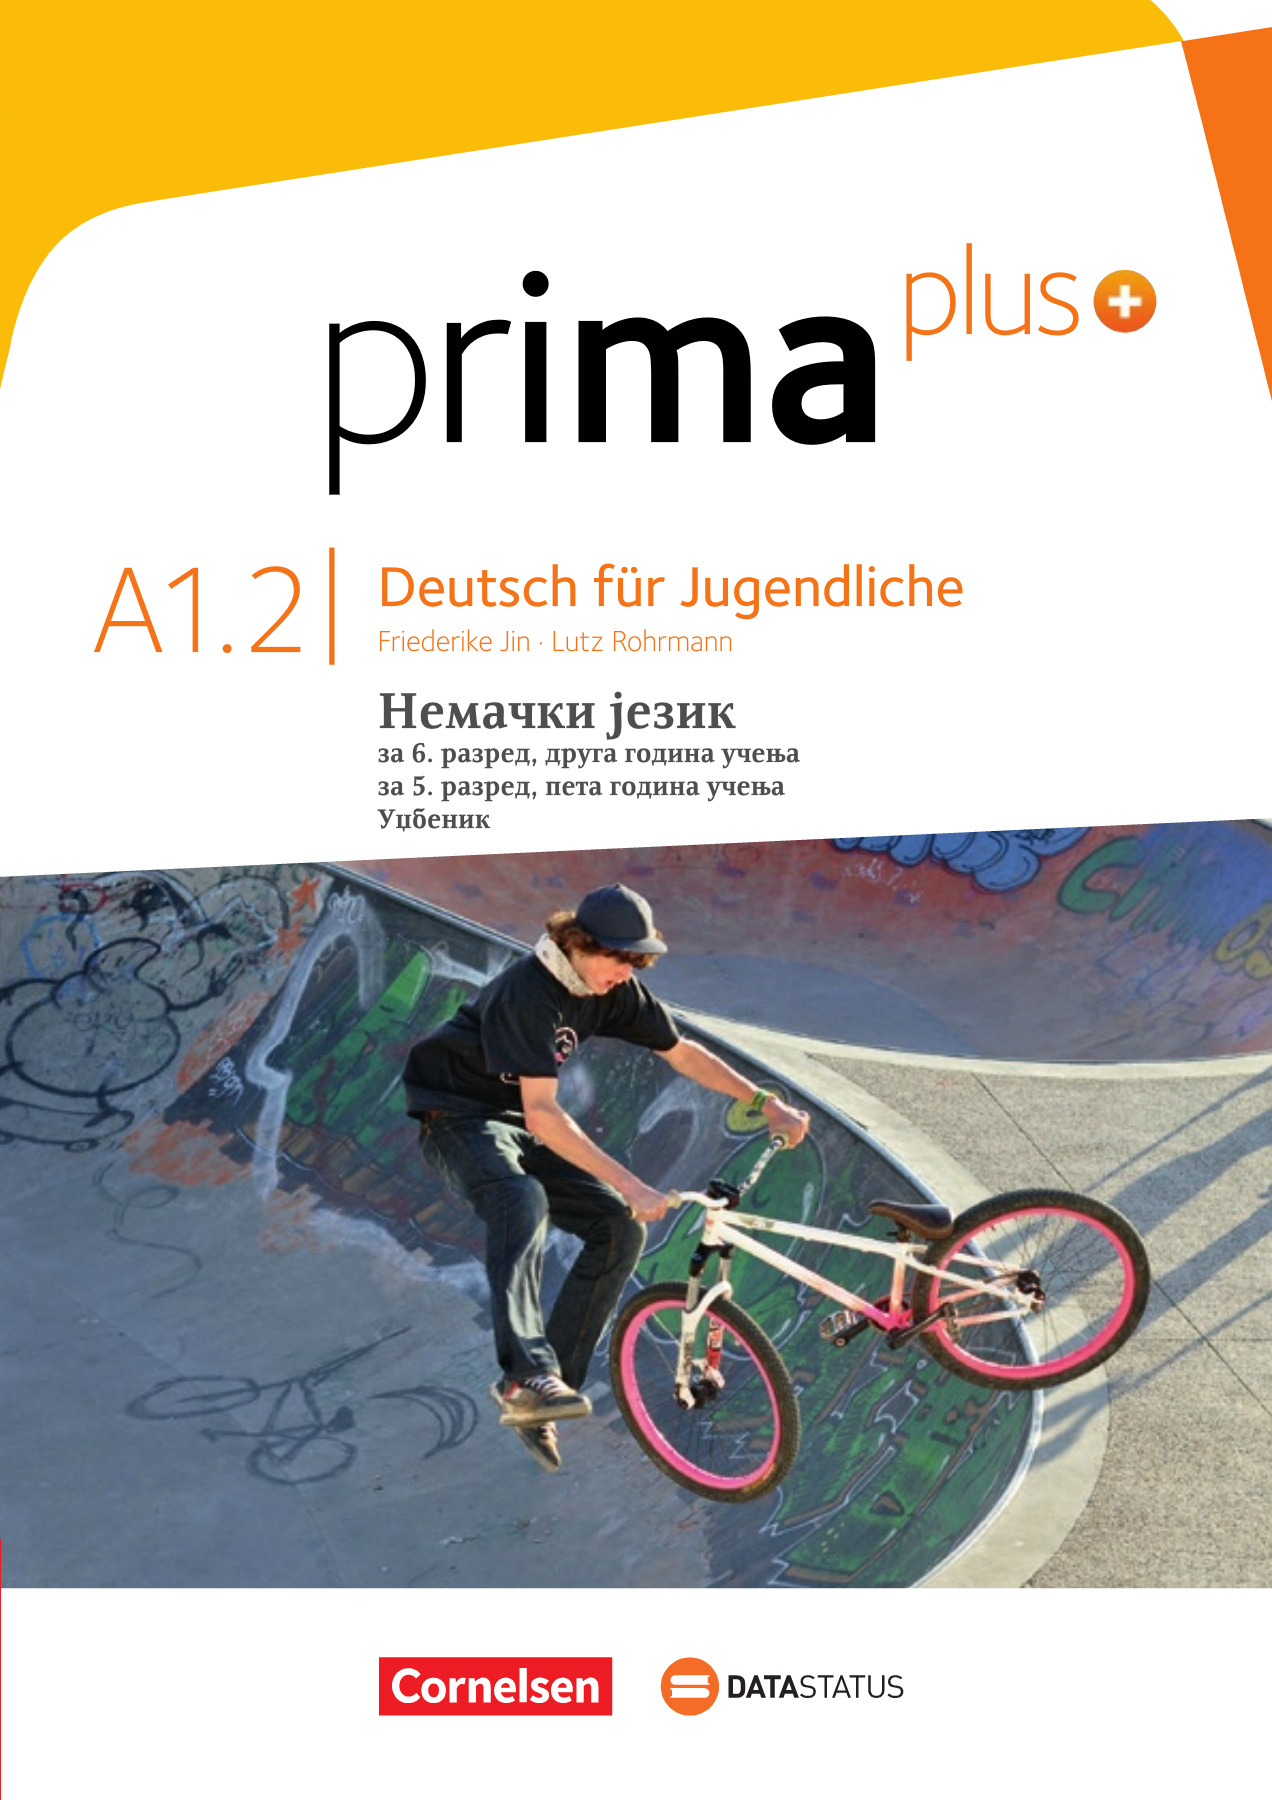 Prima Plus A1.2 - Udzbenik_Neat - Flip PDF | FlipBuilder